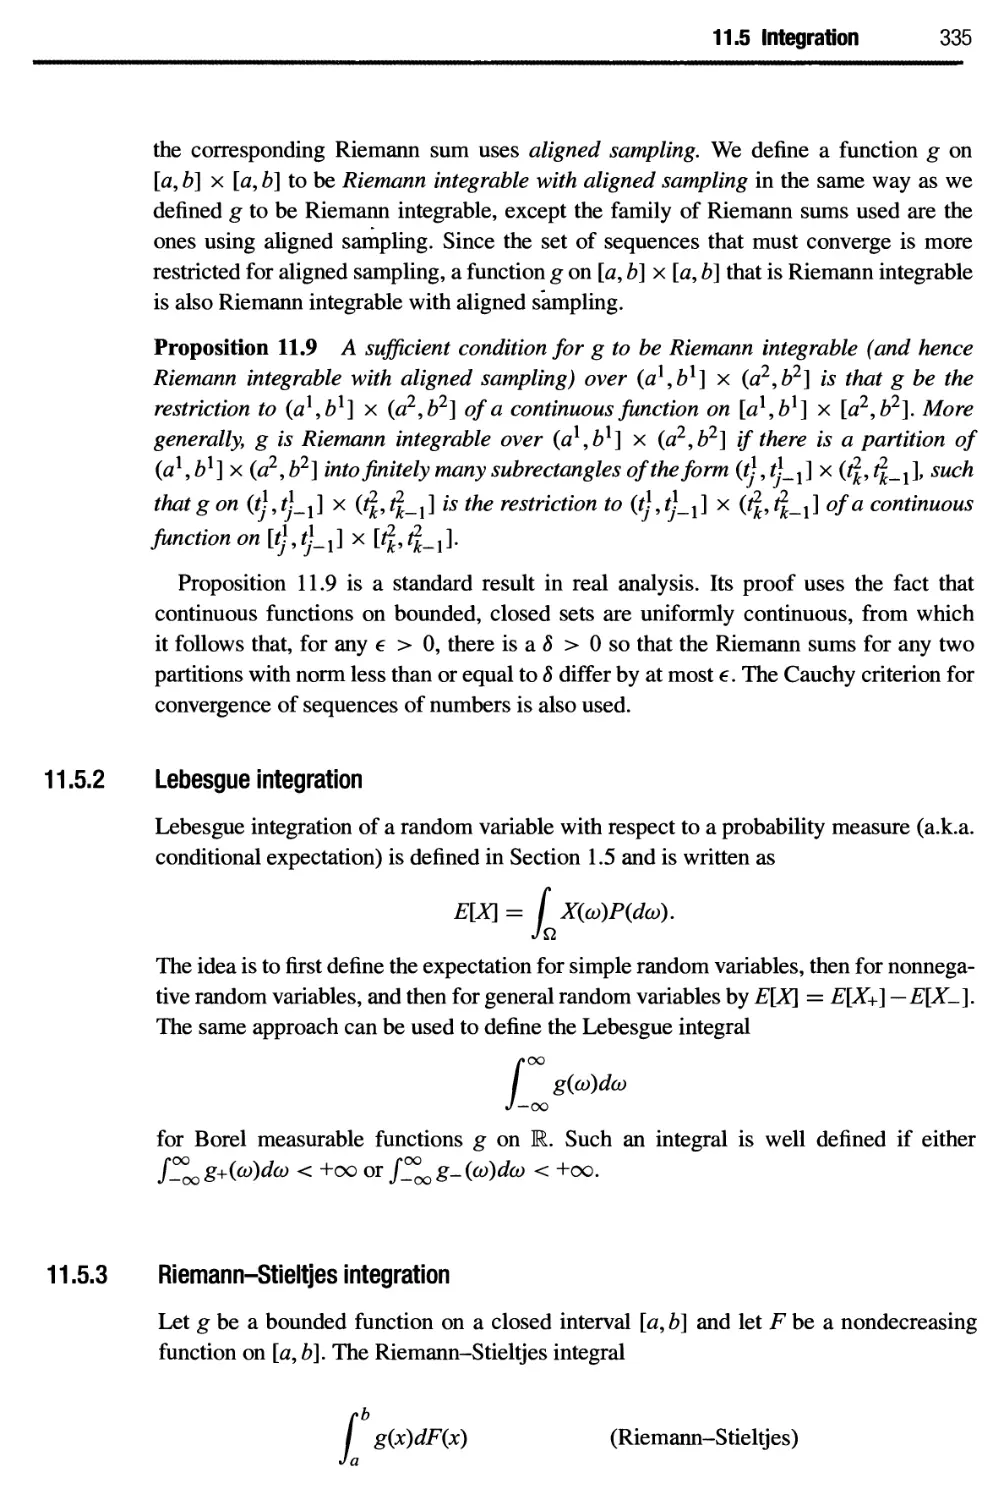 11.5.2 Lebesgue integration 335
11.5.3 Riemann-Stieltjes integration 335